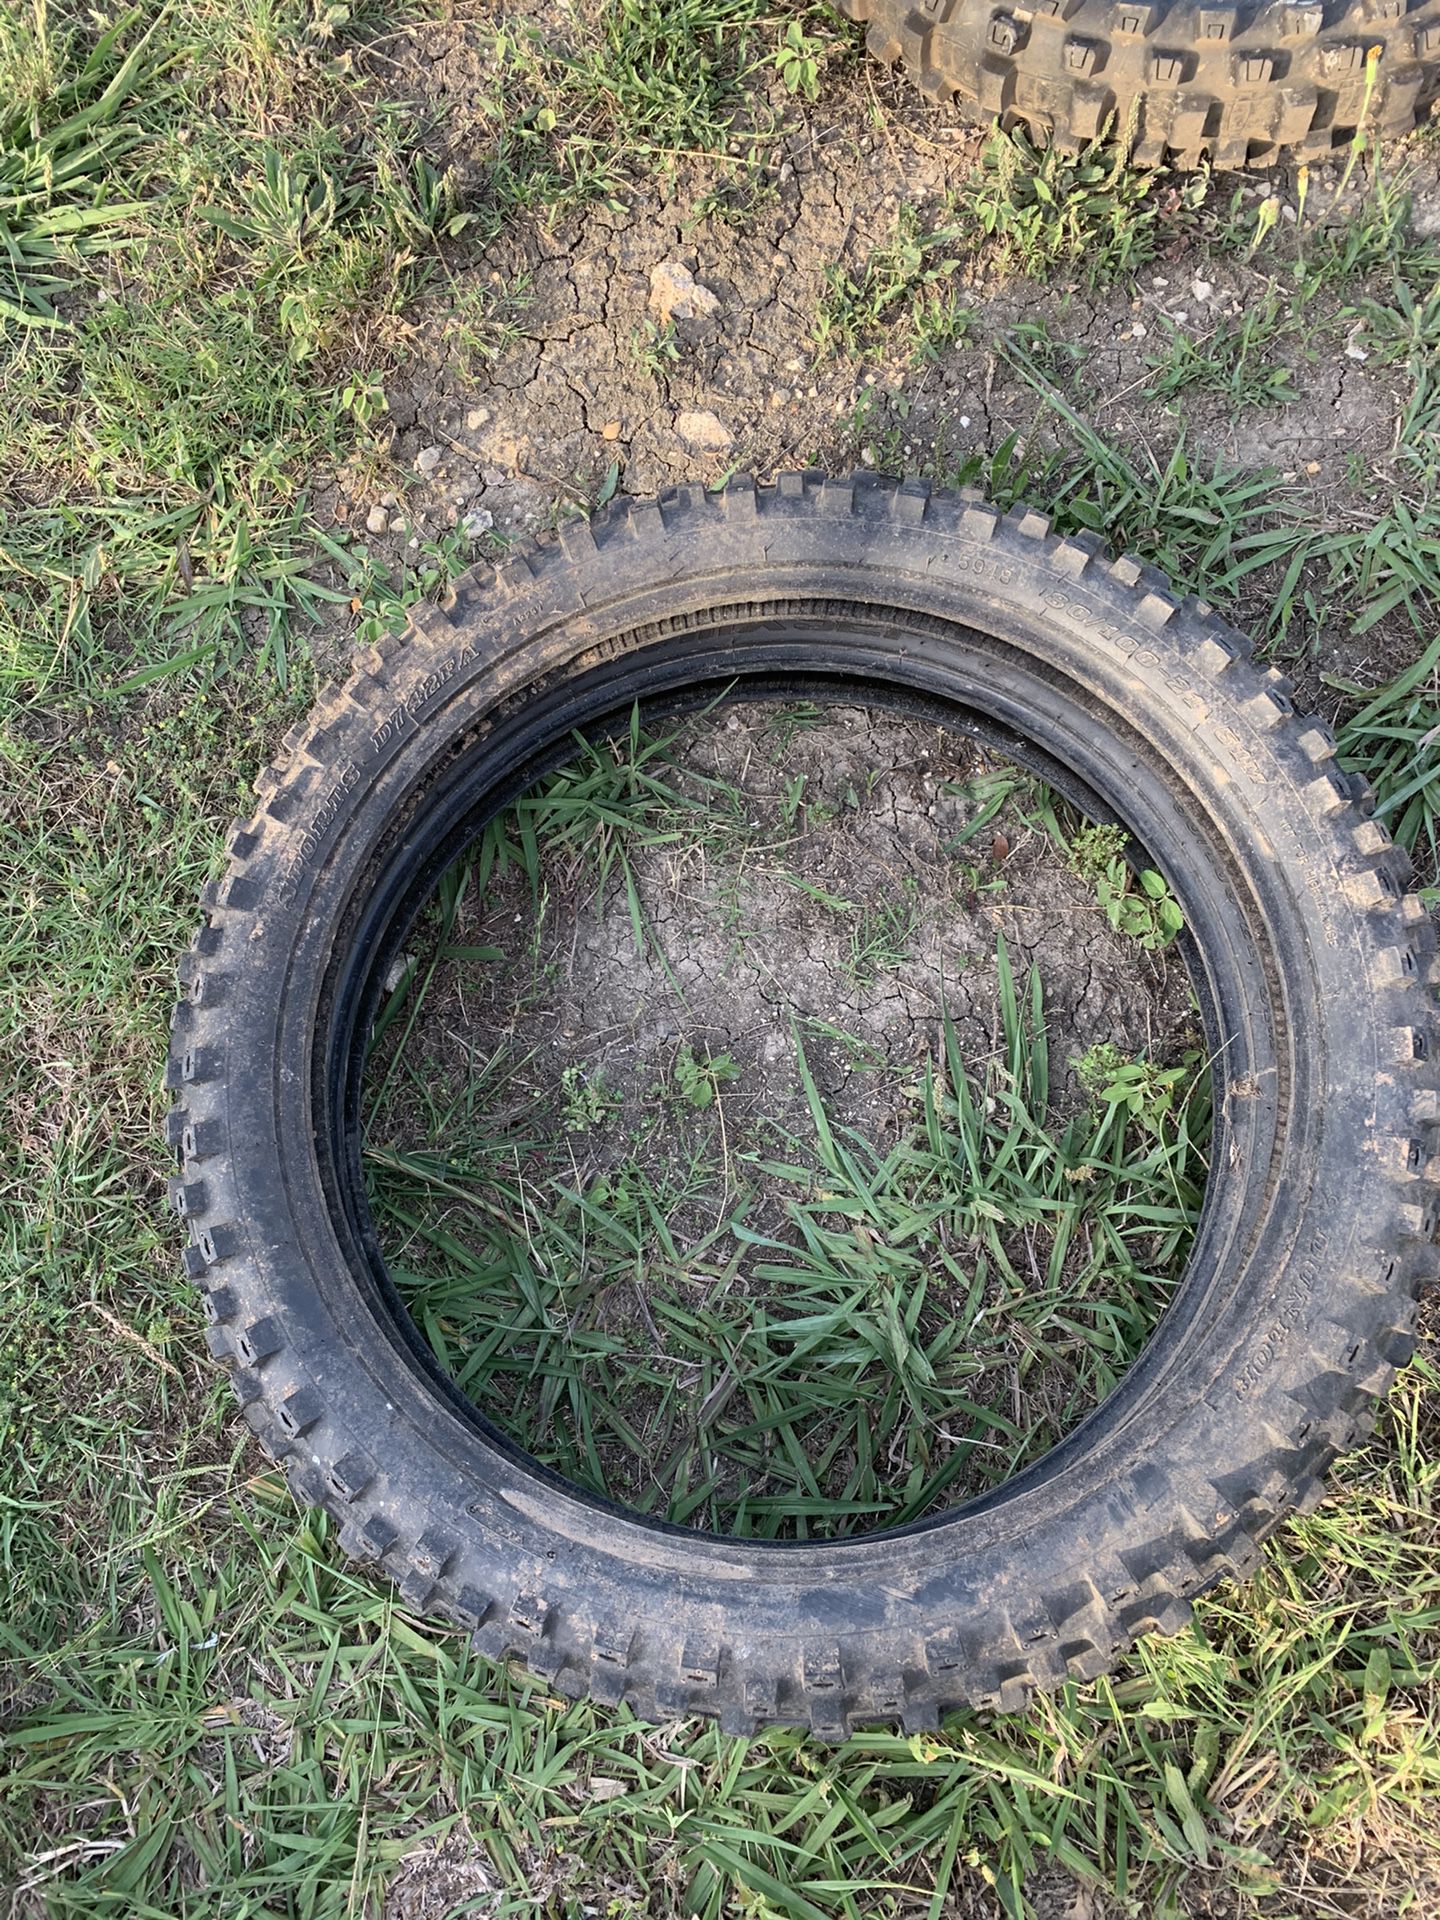 Dunlop 80/100-20 dirt bike tires like new